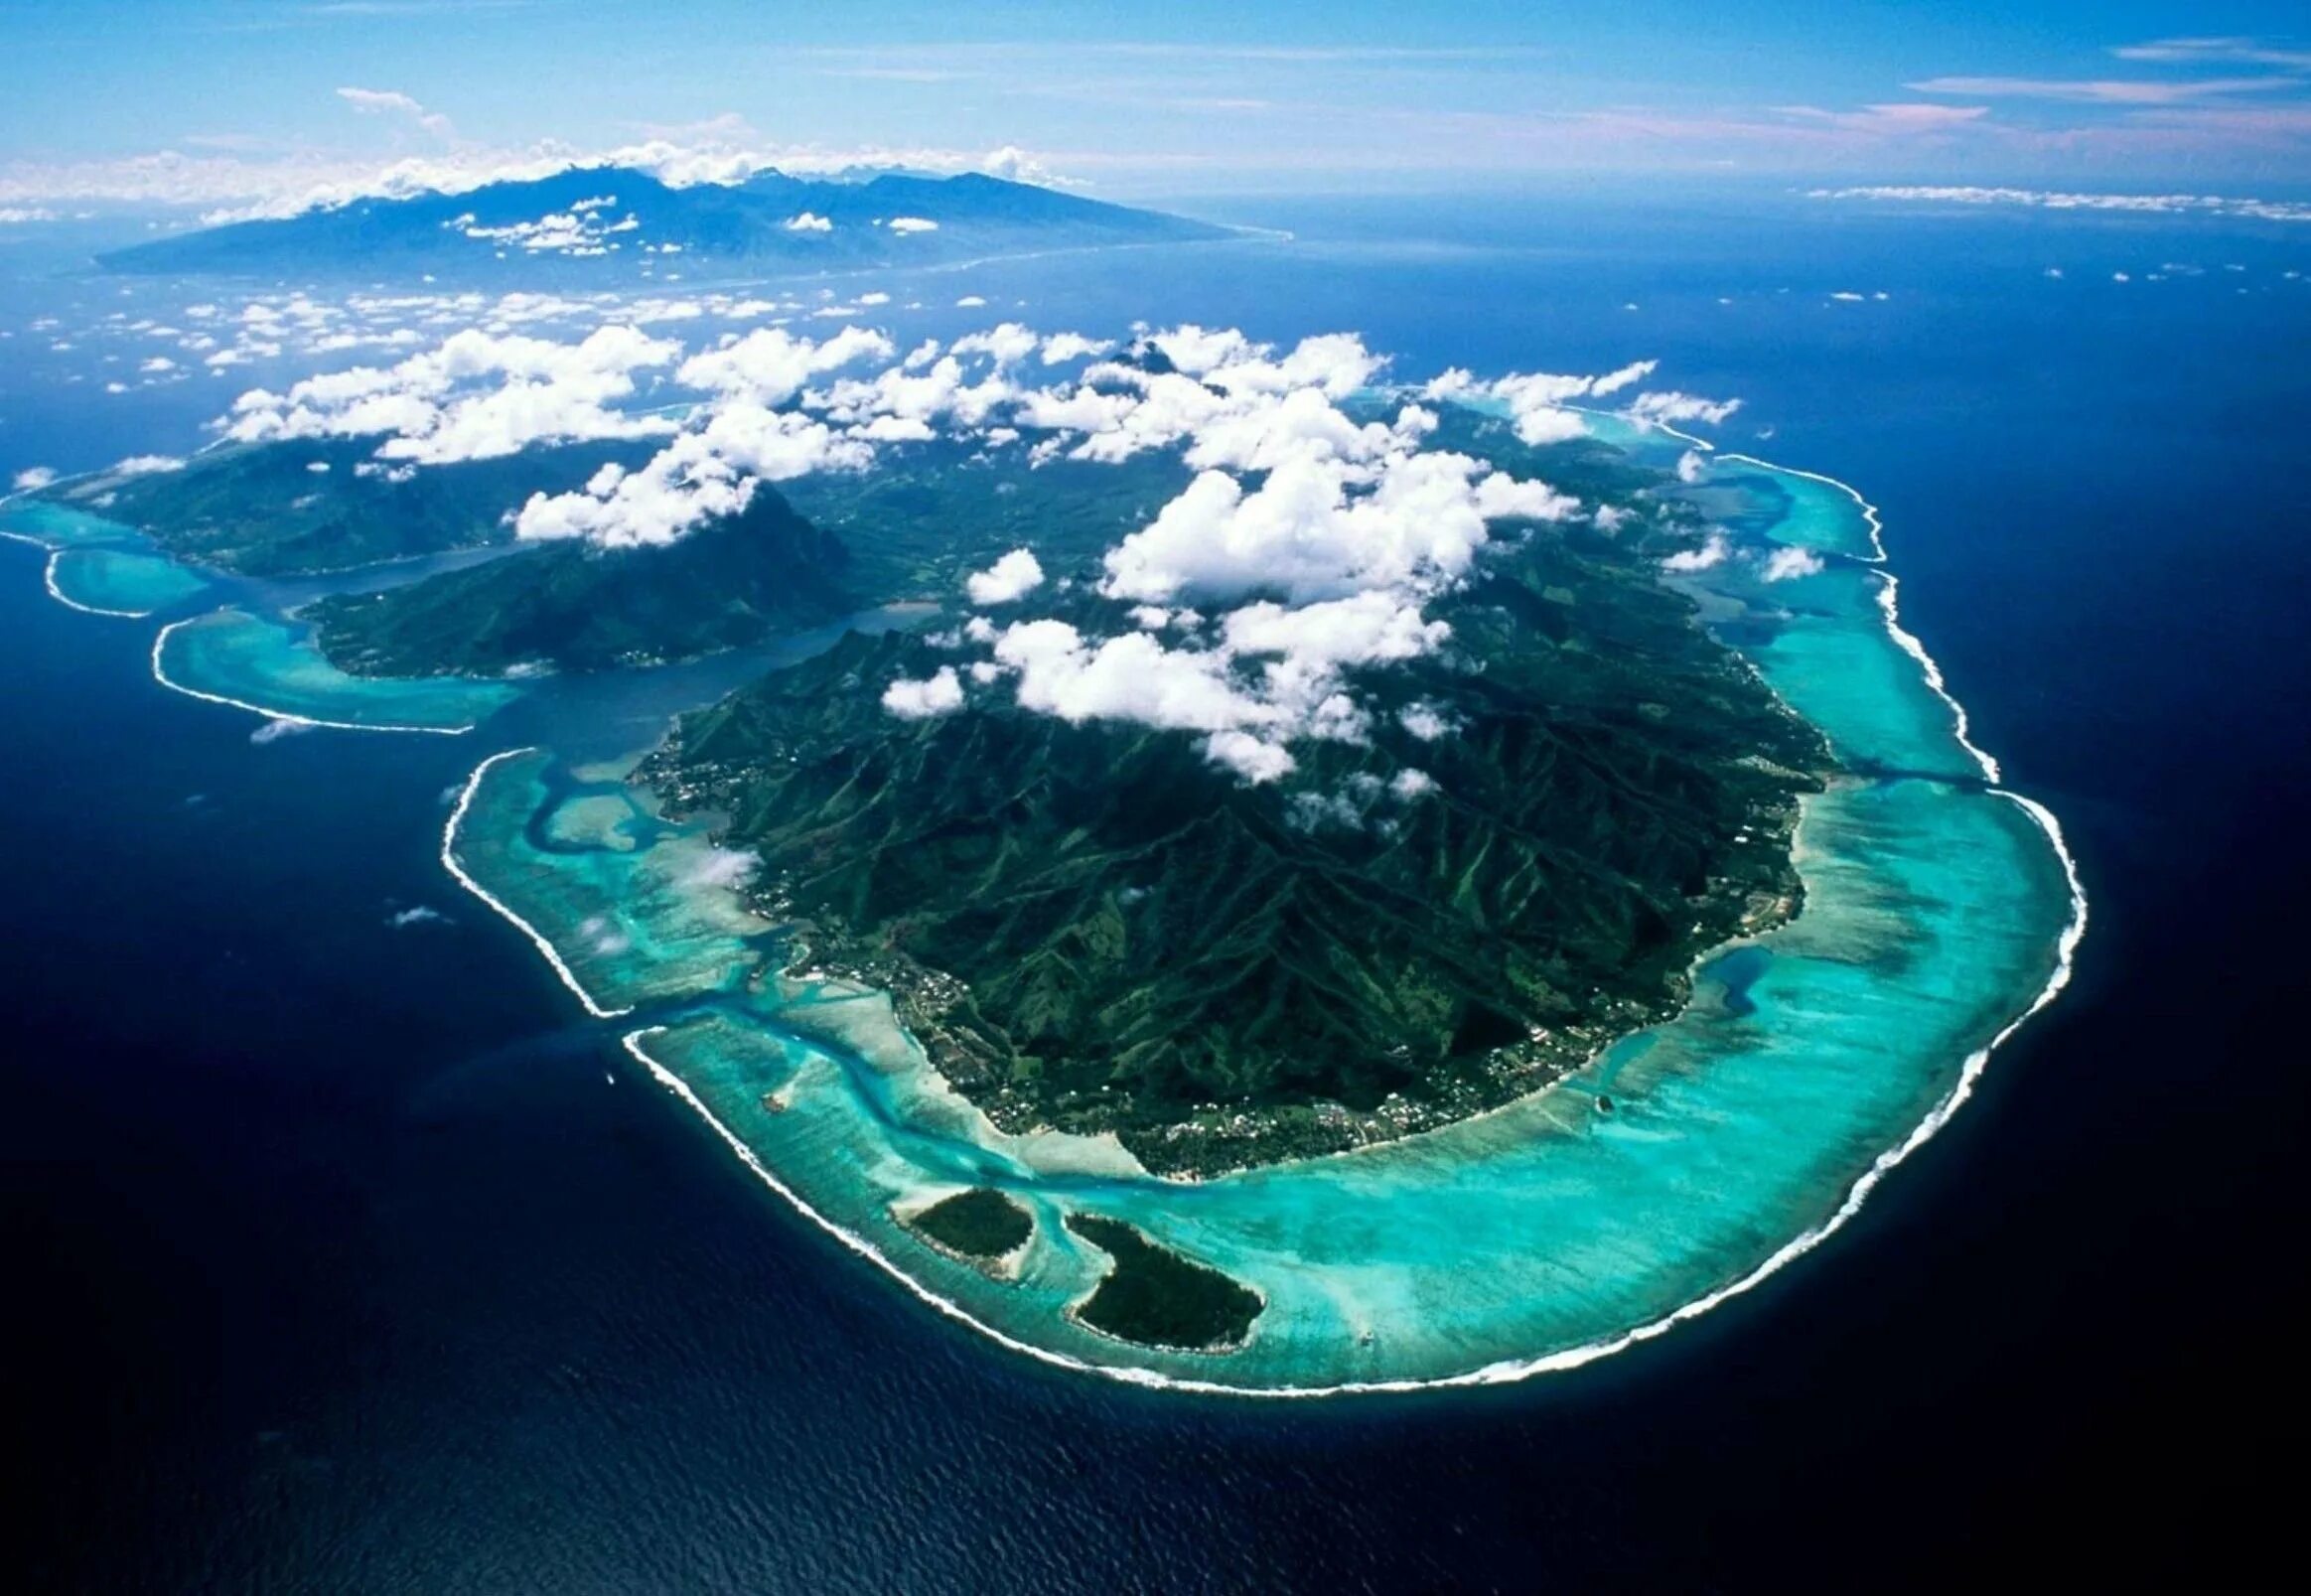 Tahiti французская Полинезия. Муреа Таити. Таити остров архипелаг. Остров Марито французская Полинезия. Континент атлантического океана